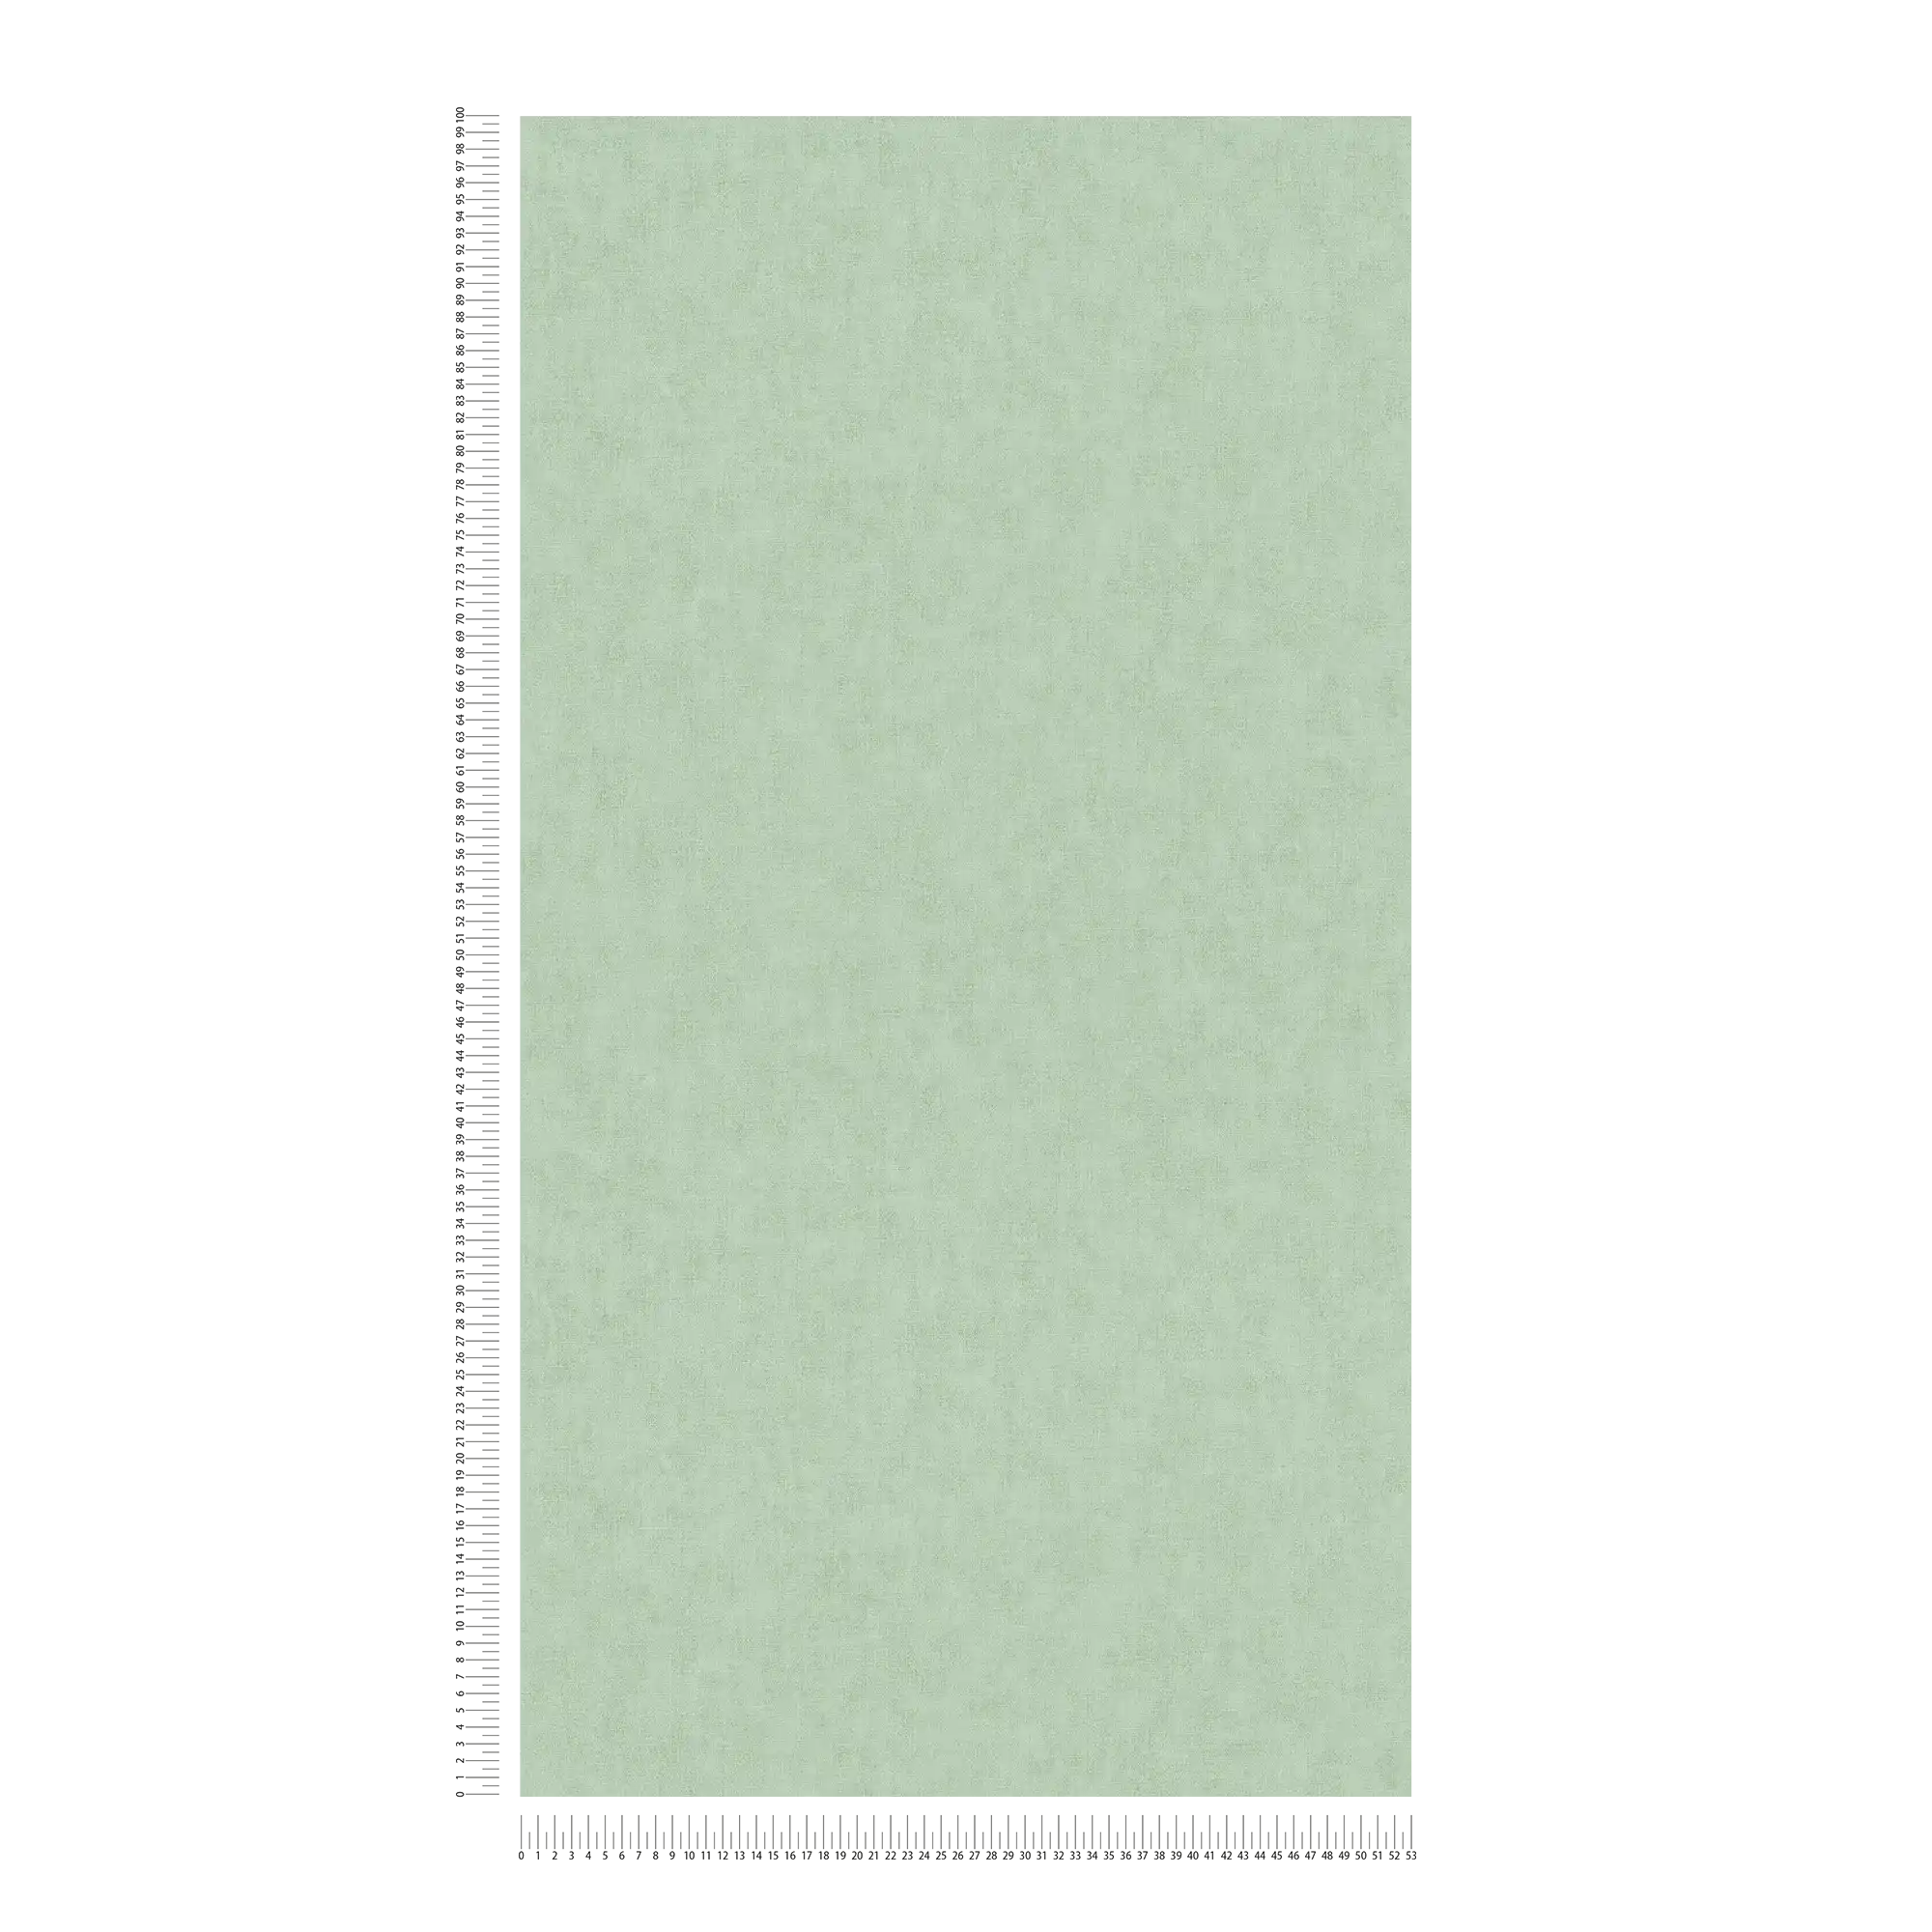             Carta da parati a tinta unita, effetto lino e stile scandinavo - verde
        